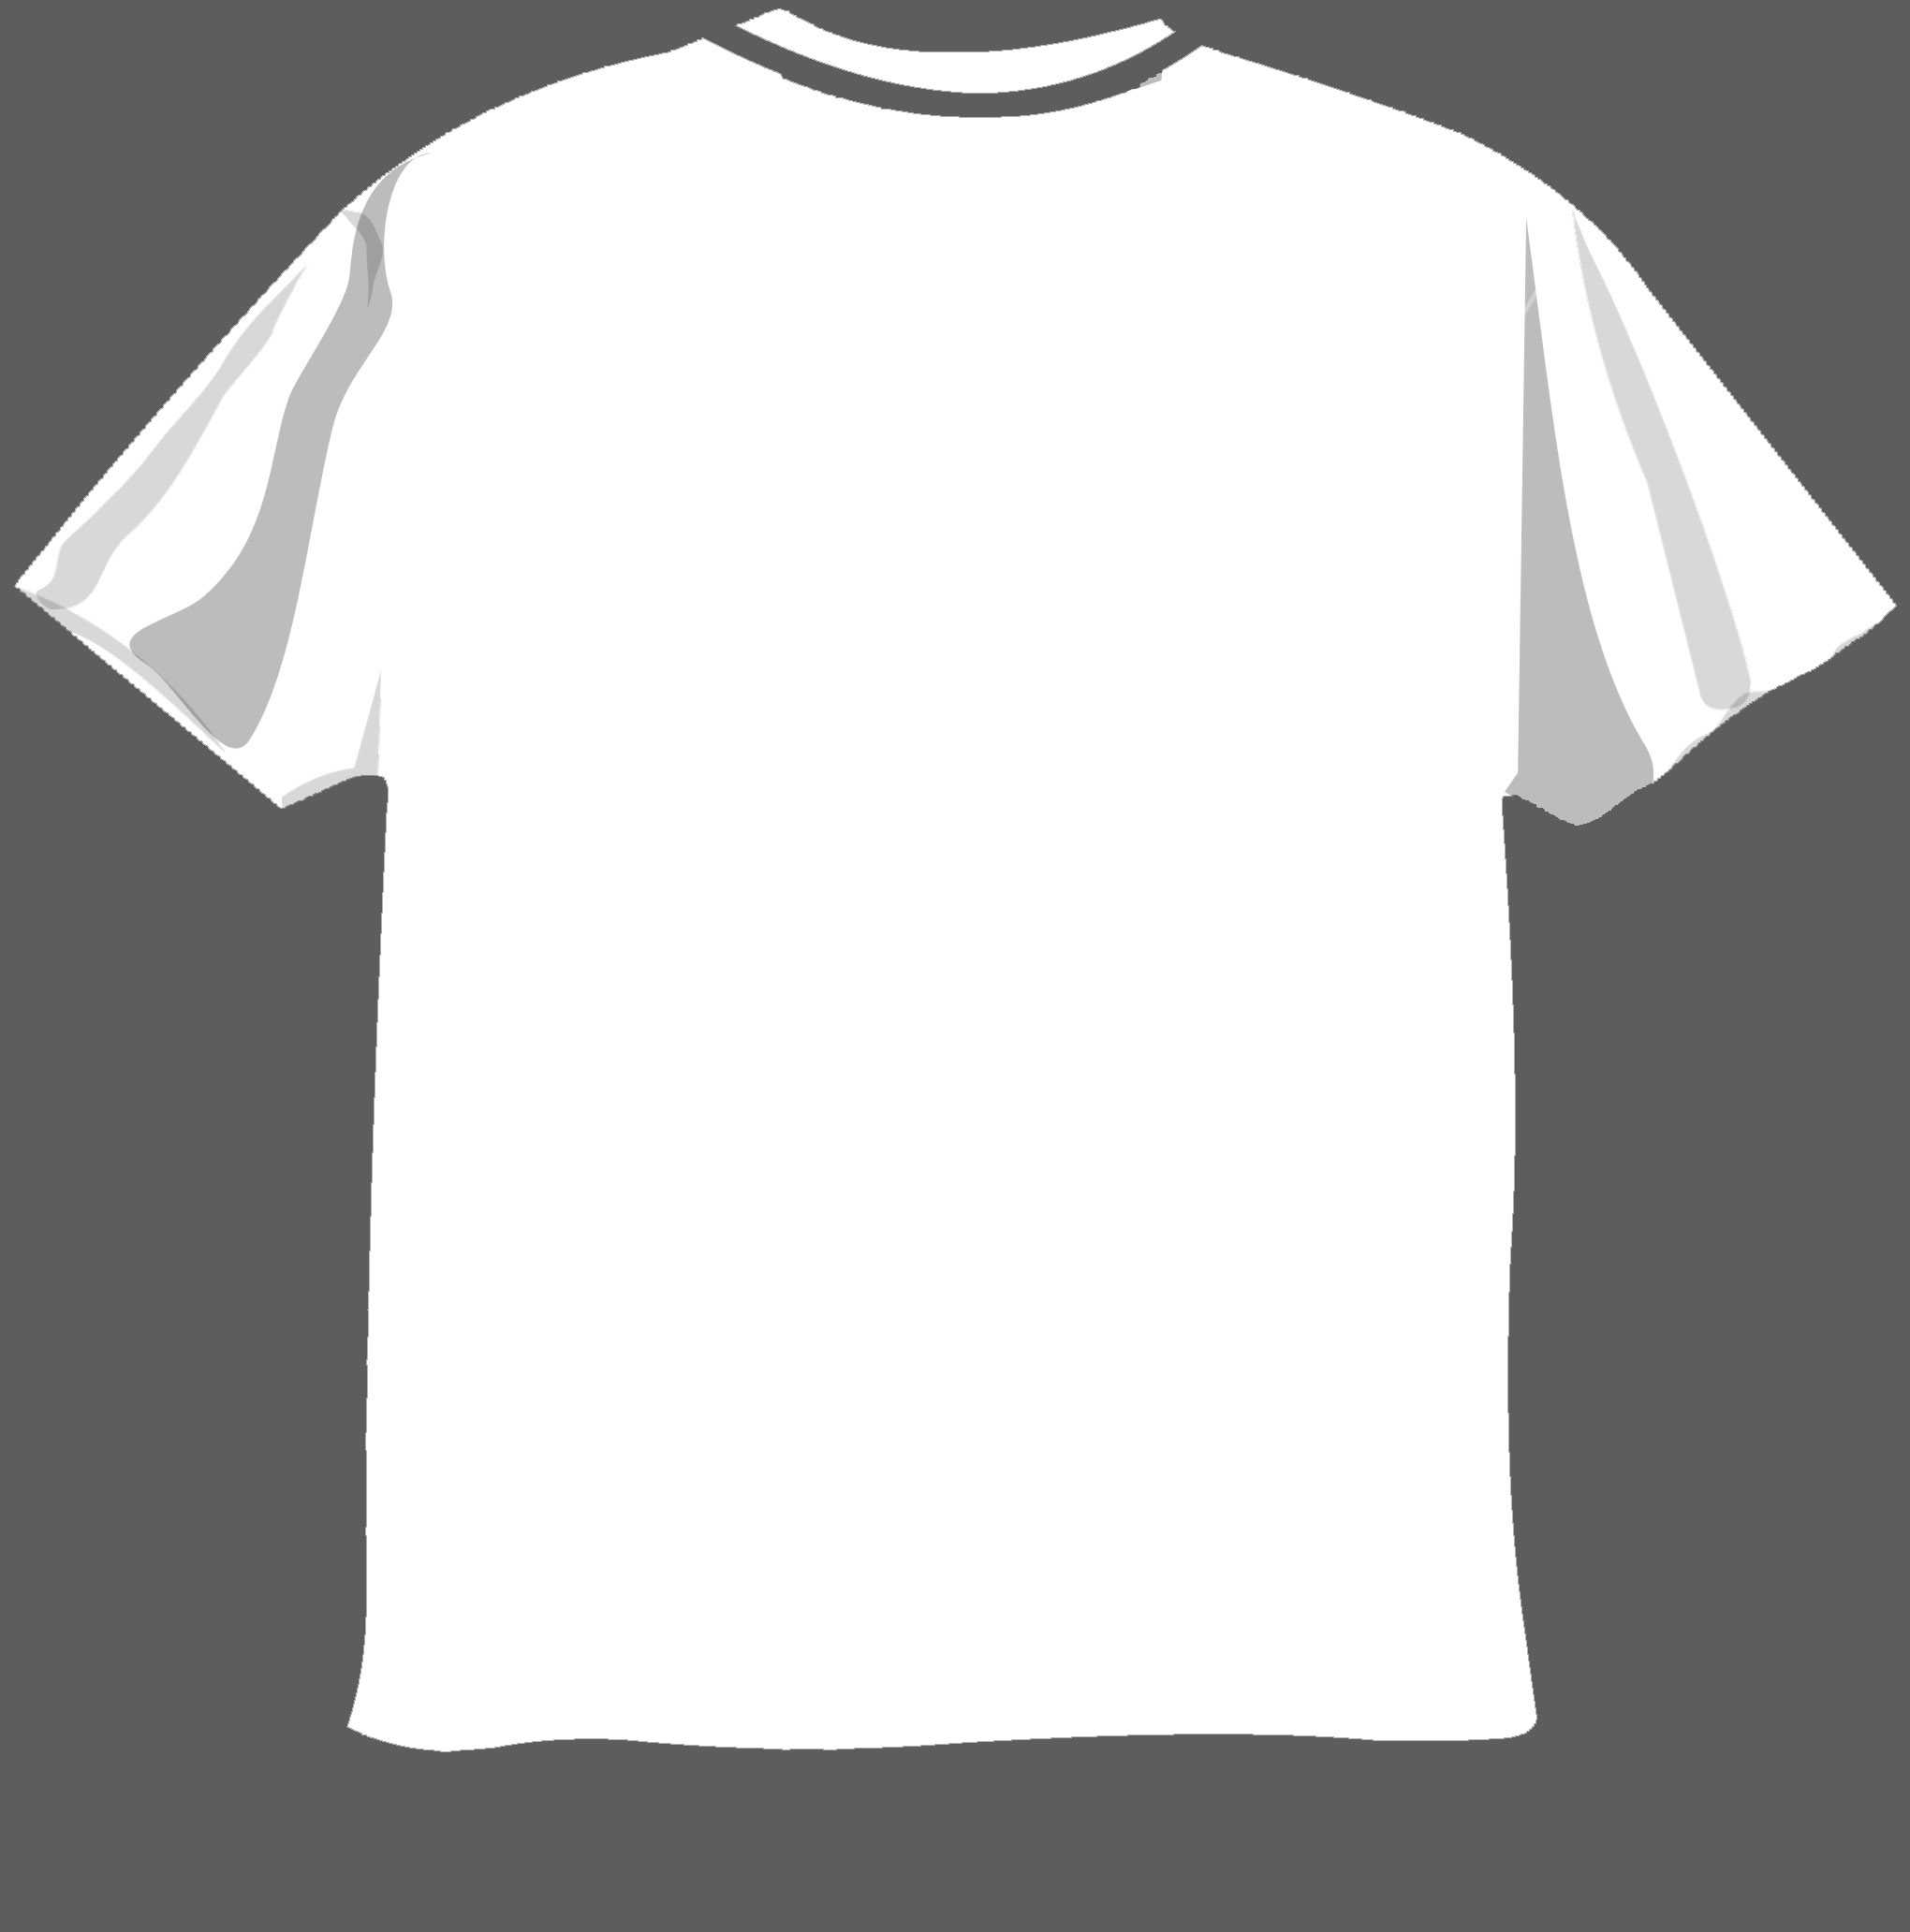 20 T Shirt Design Template Photoshop Images – Shirt Design Inside Blank T Shirt Design Template Psd